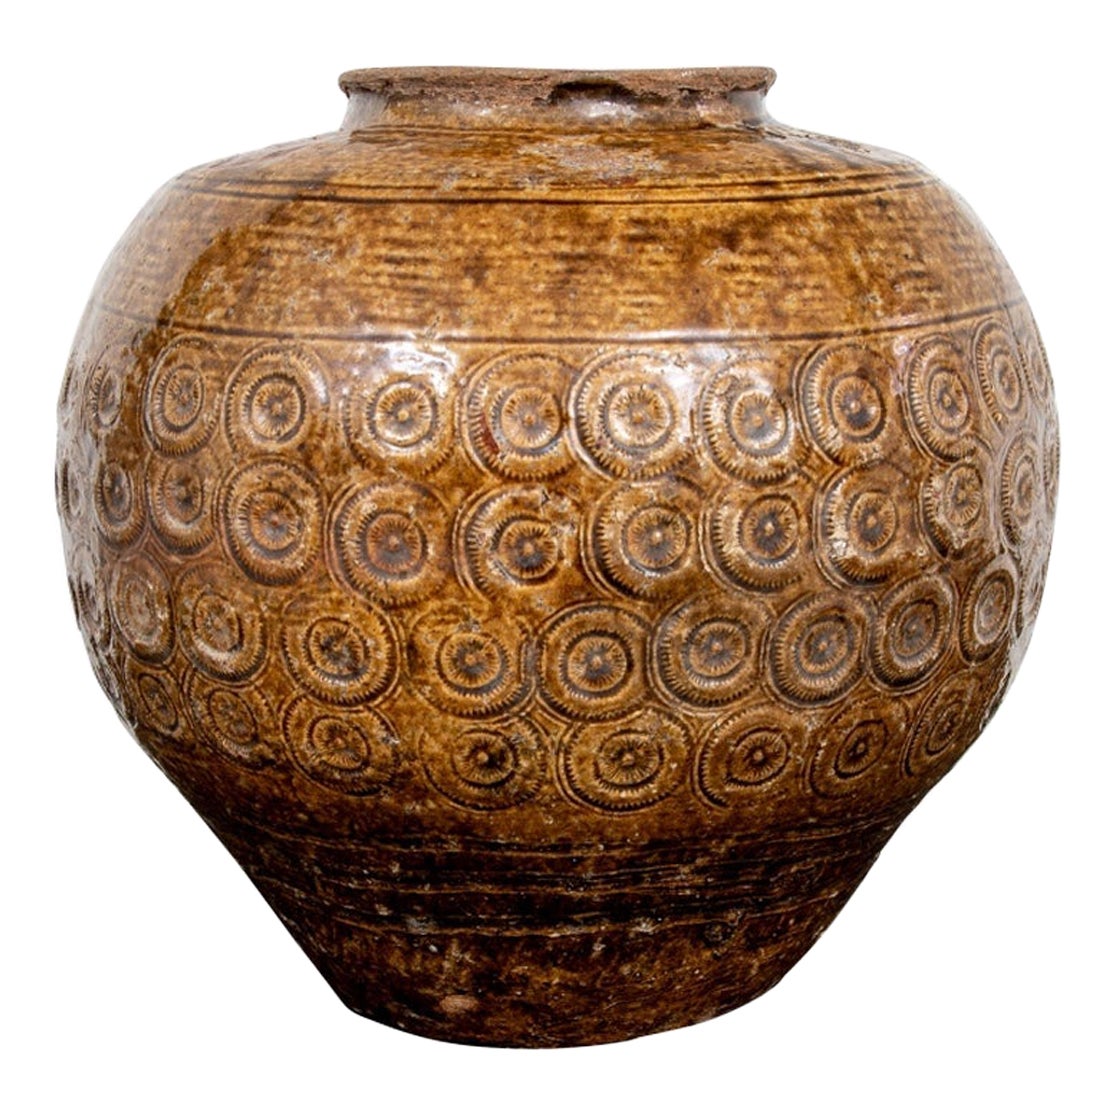 Rustic Asian Textured Glazed Ceramic Storage Jar